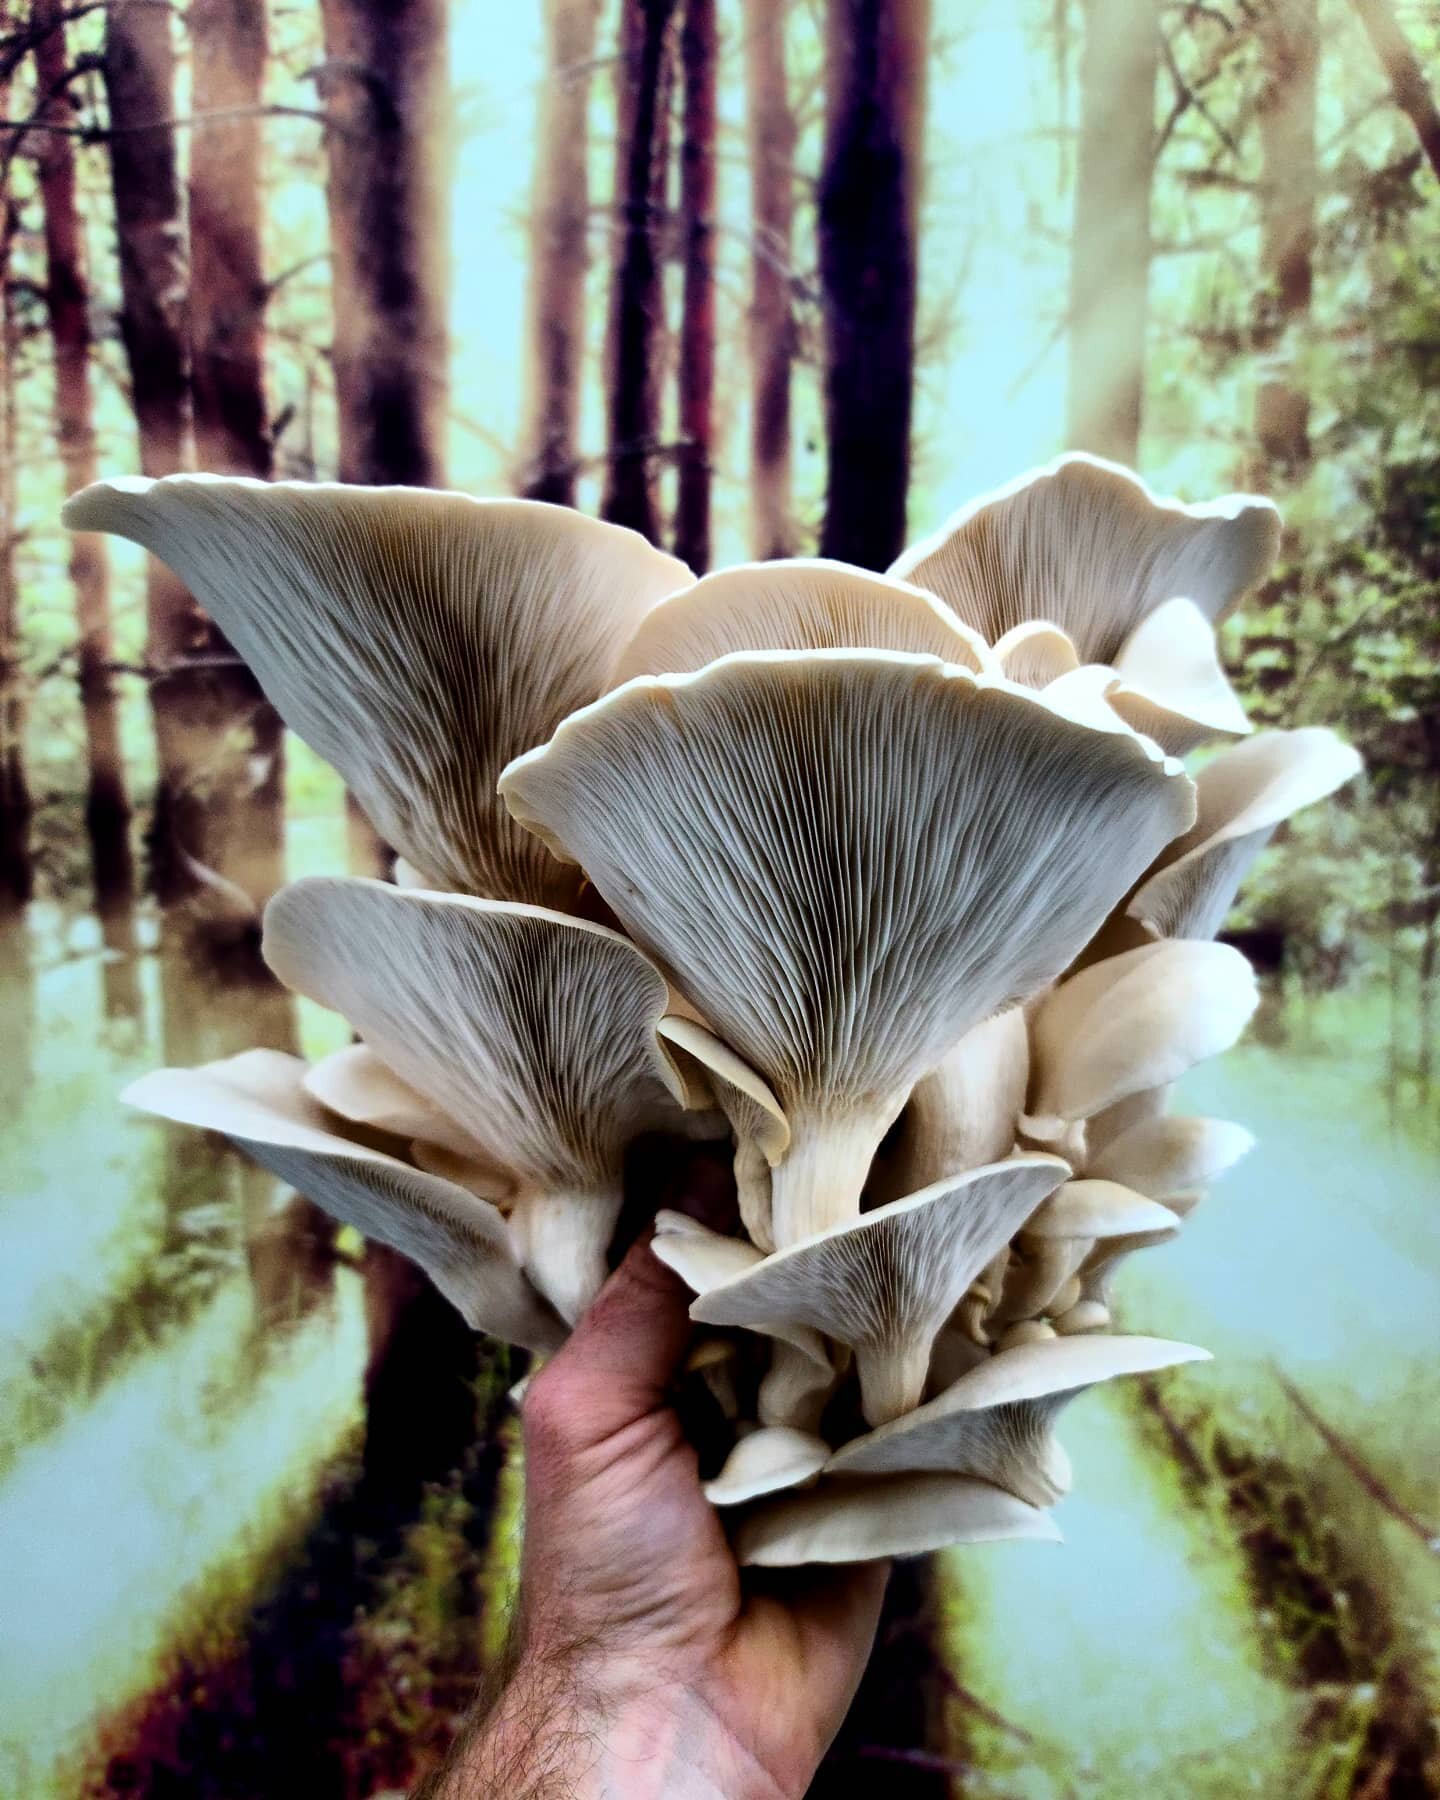 Eat more Mushrooms!!

#mushrooms #fungifantastic #mycologyclub #fungiofinstagram #mushies #mycology #growmushrooms #mushlove #fungiphotography #fungifreaks #fungi #shrooms #wildcrafting #fungus #fungusamongus